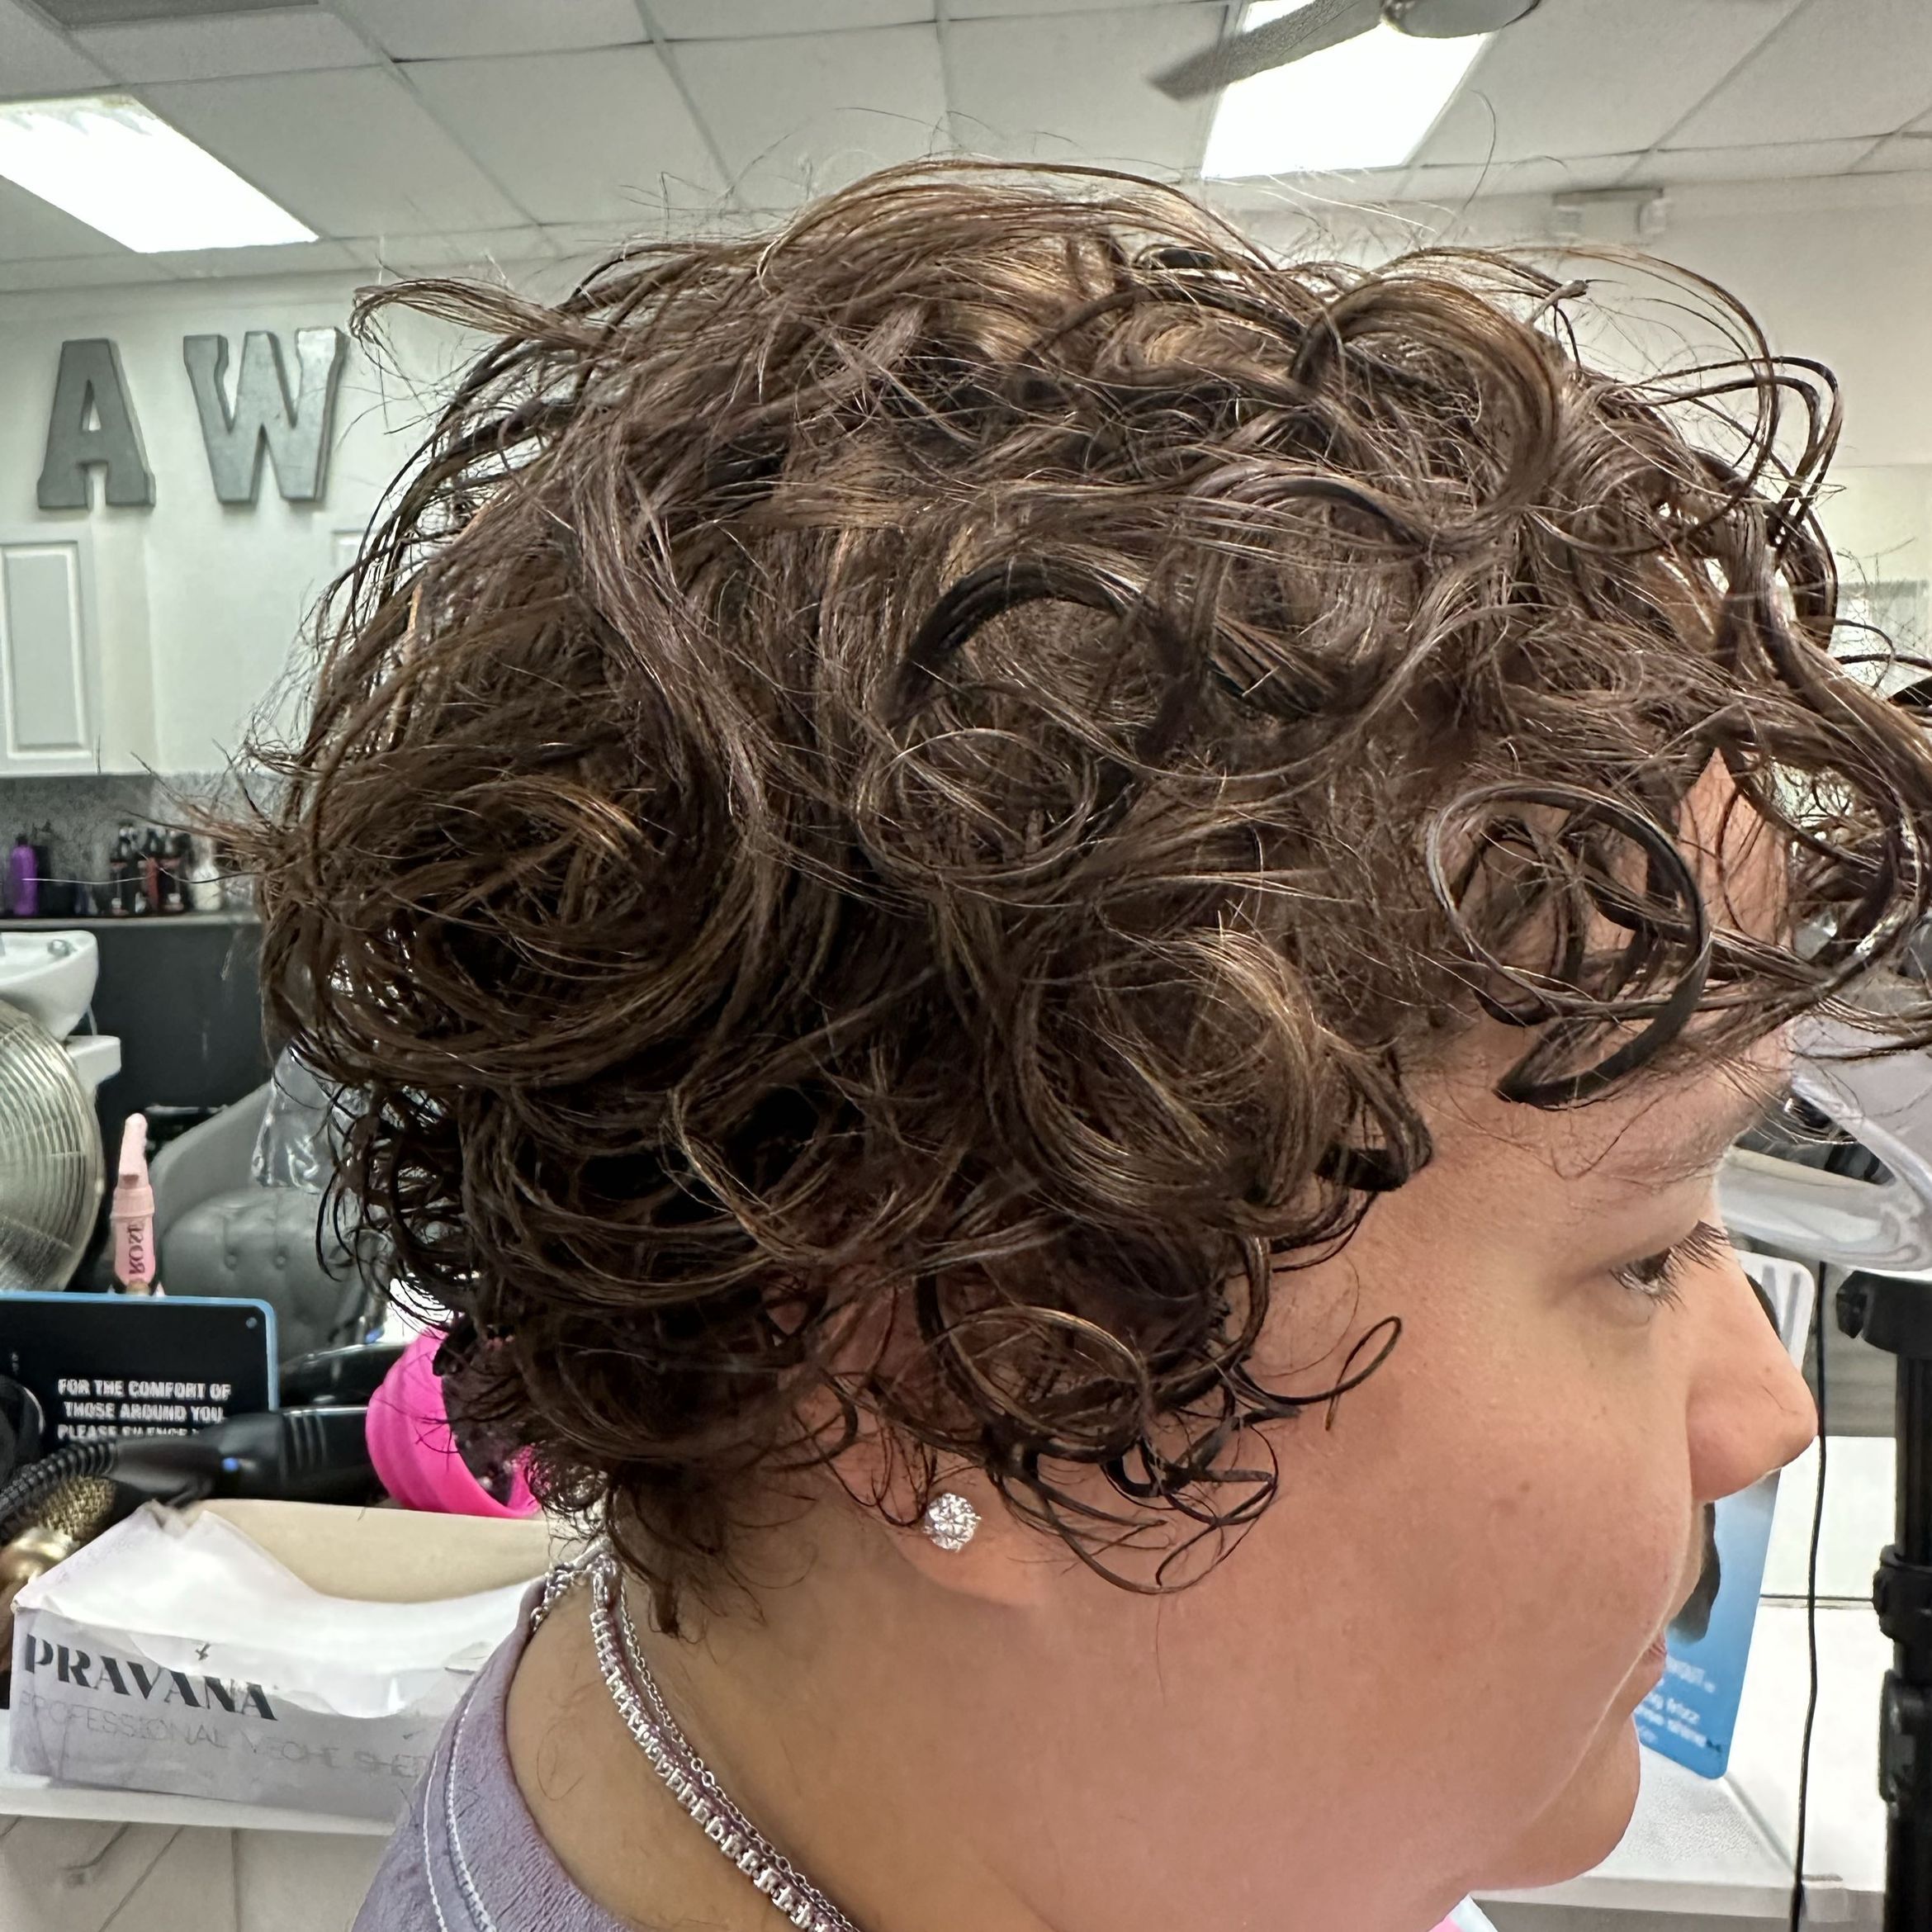 Curly haircut portfolio